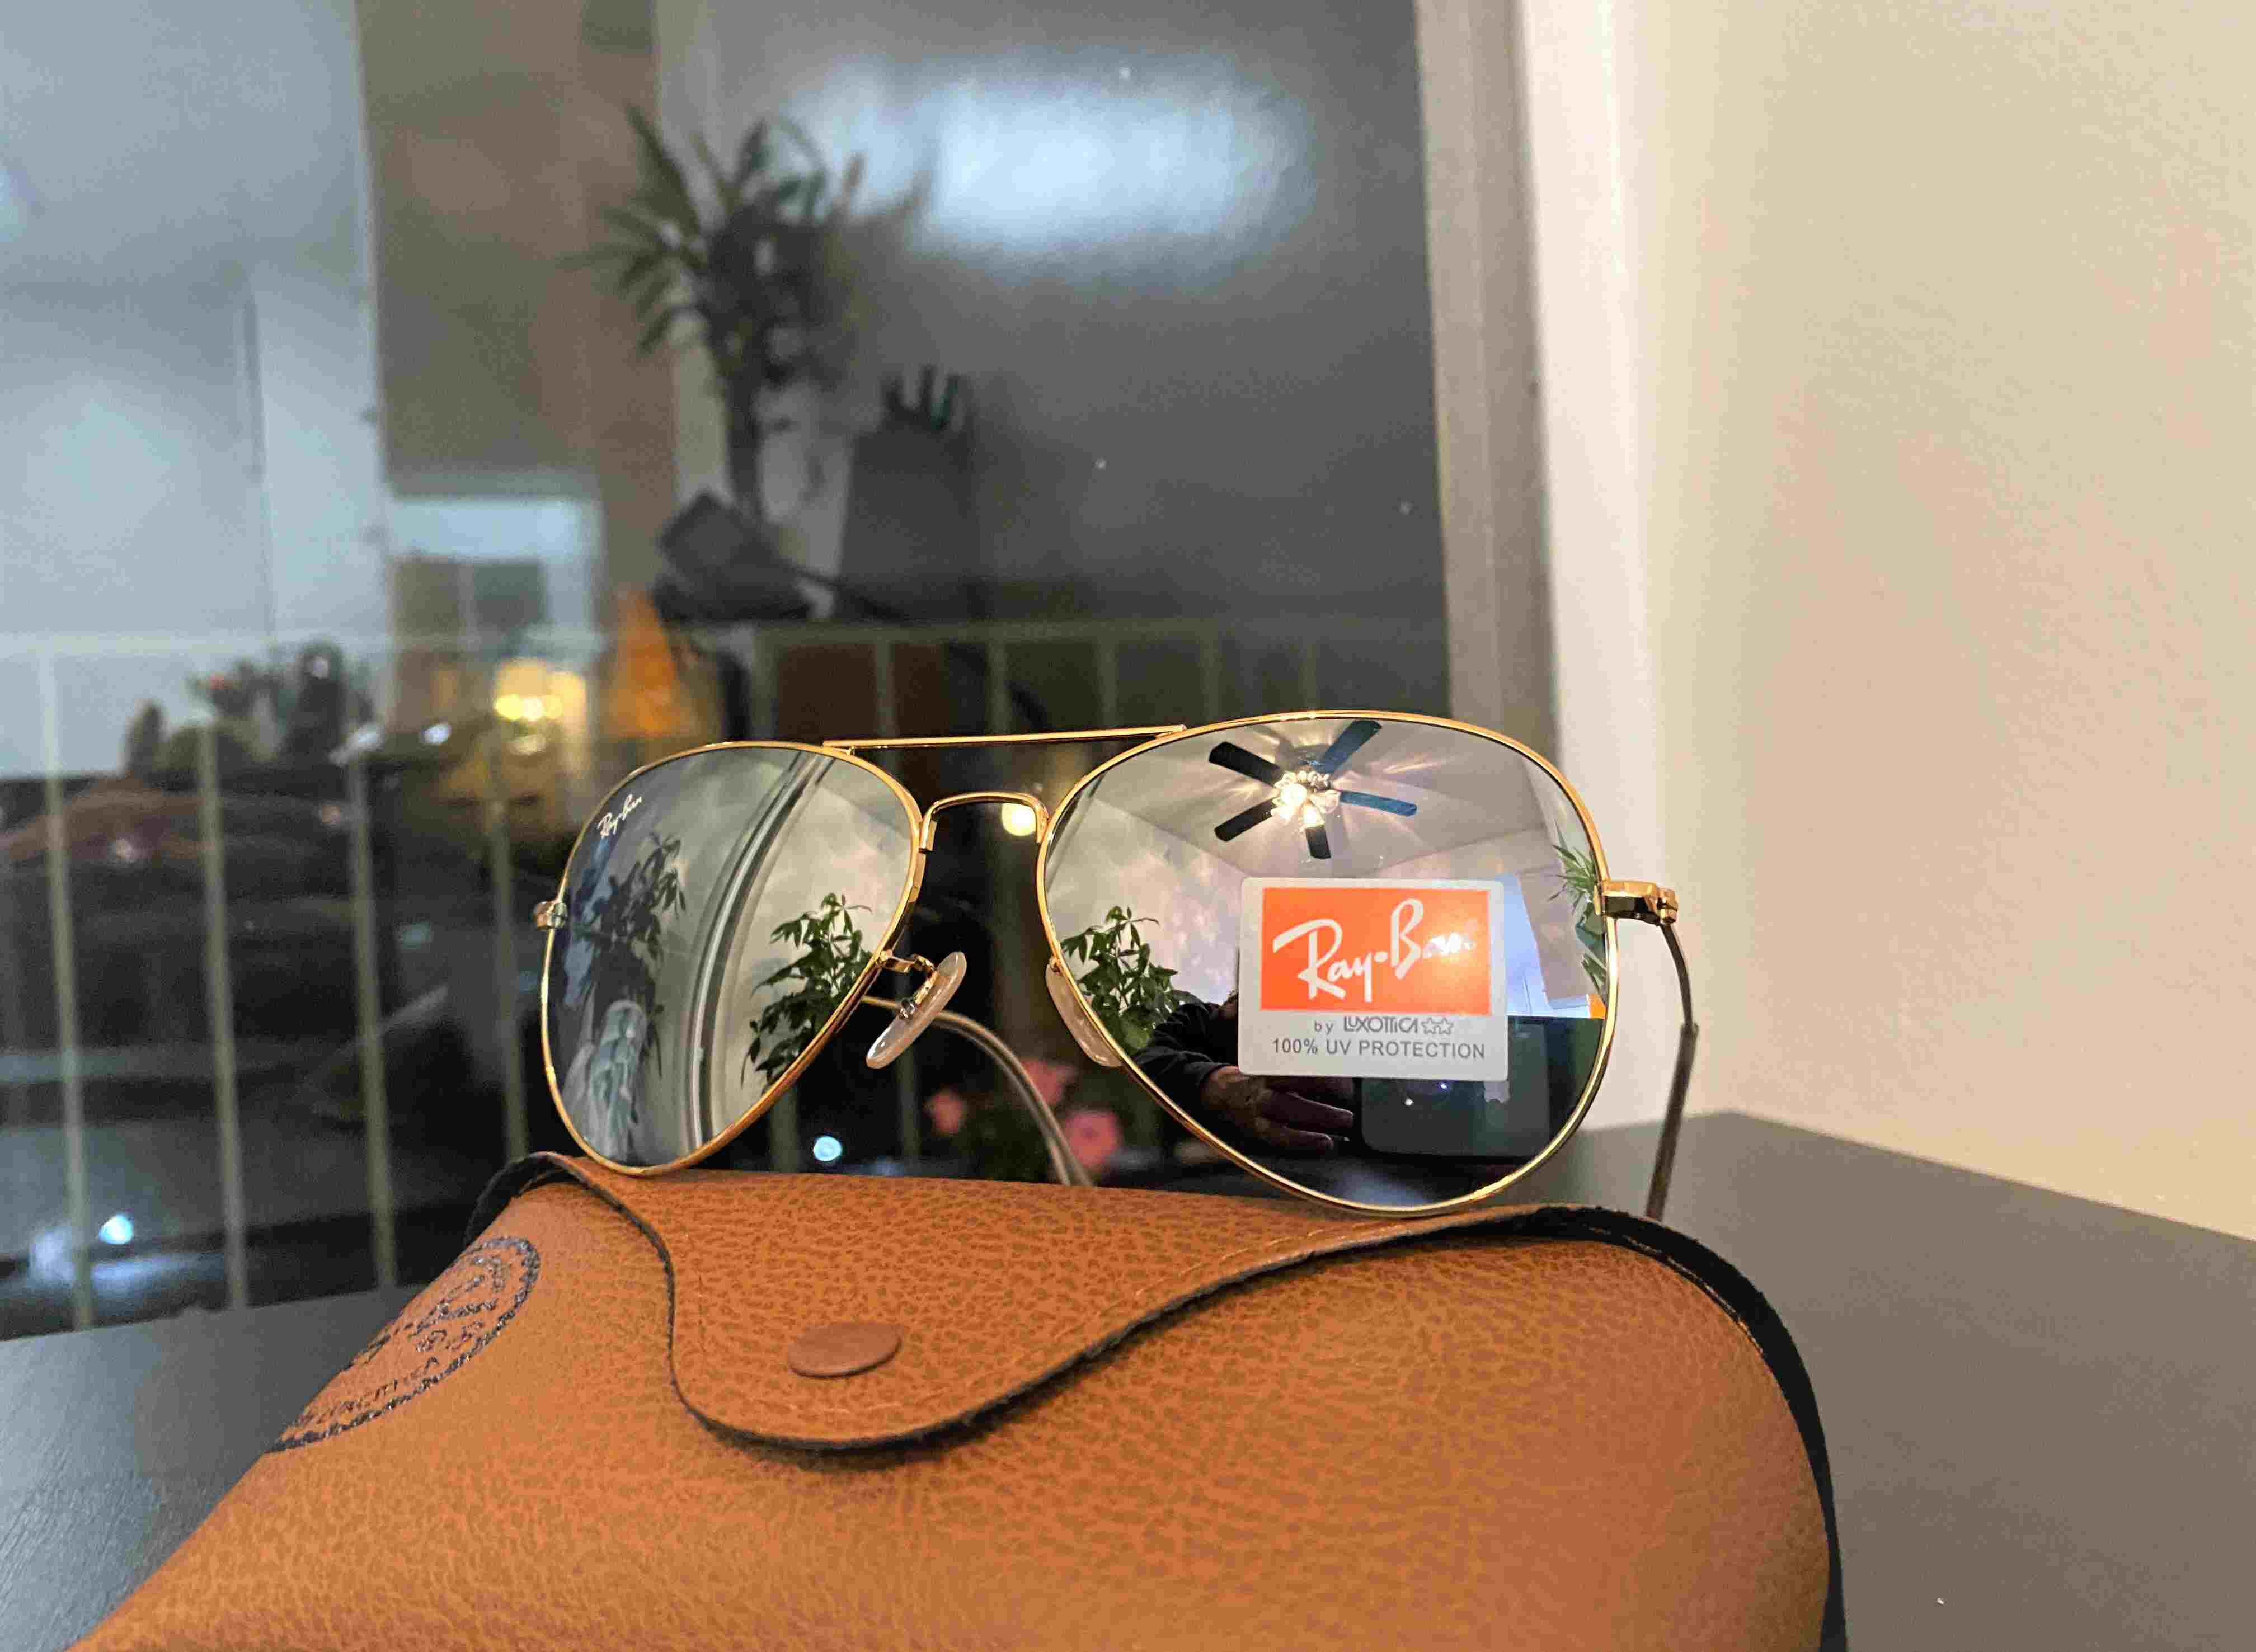 Brand New Authentic Aviator Sunglasses